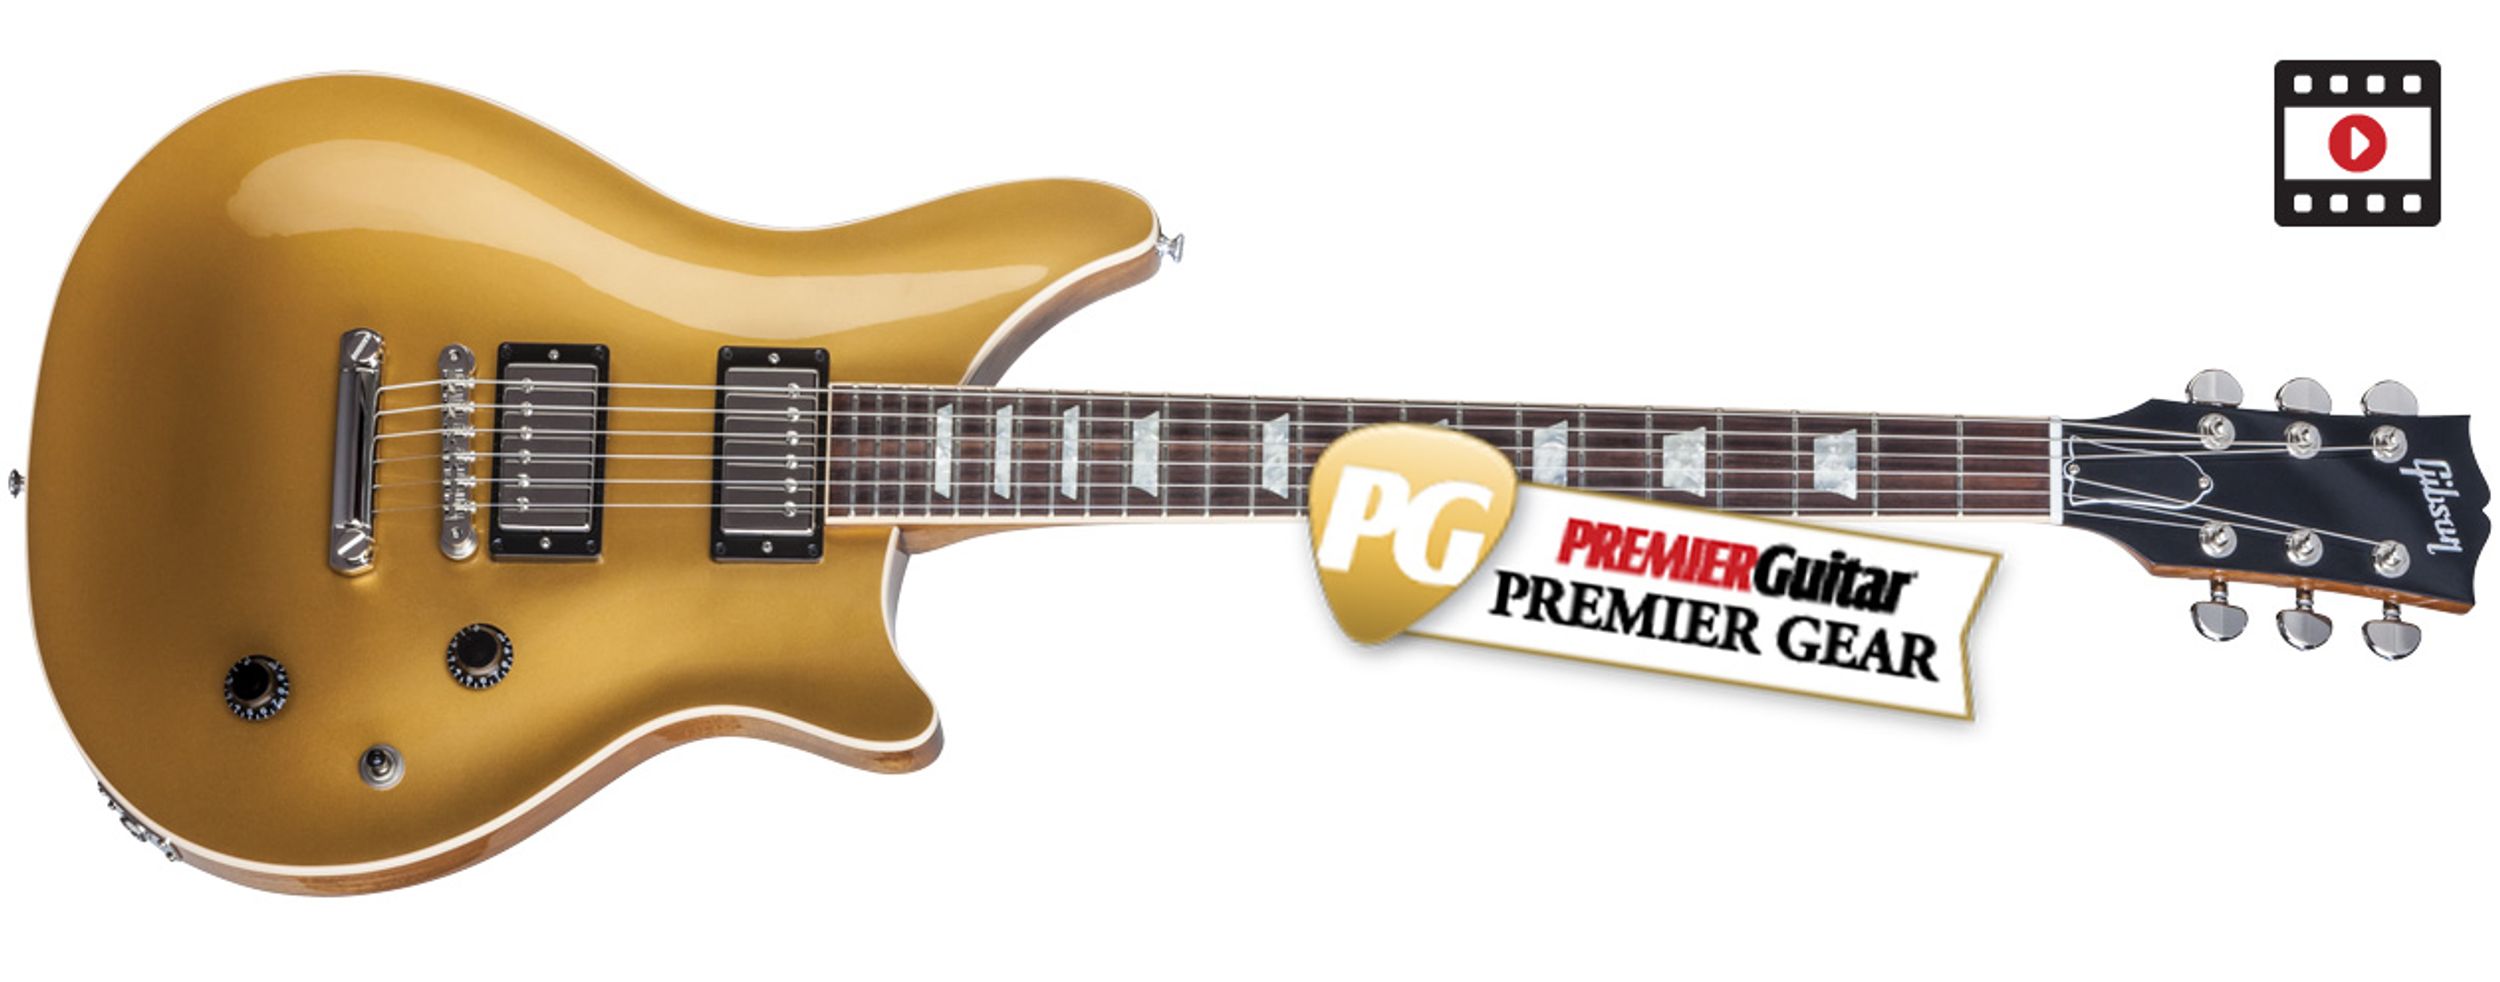 Gibson Modern Double Cut Standard Review